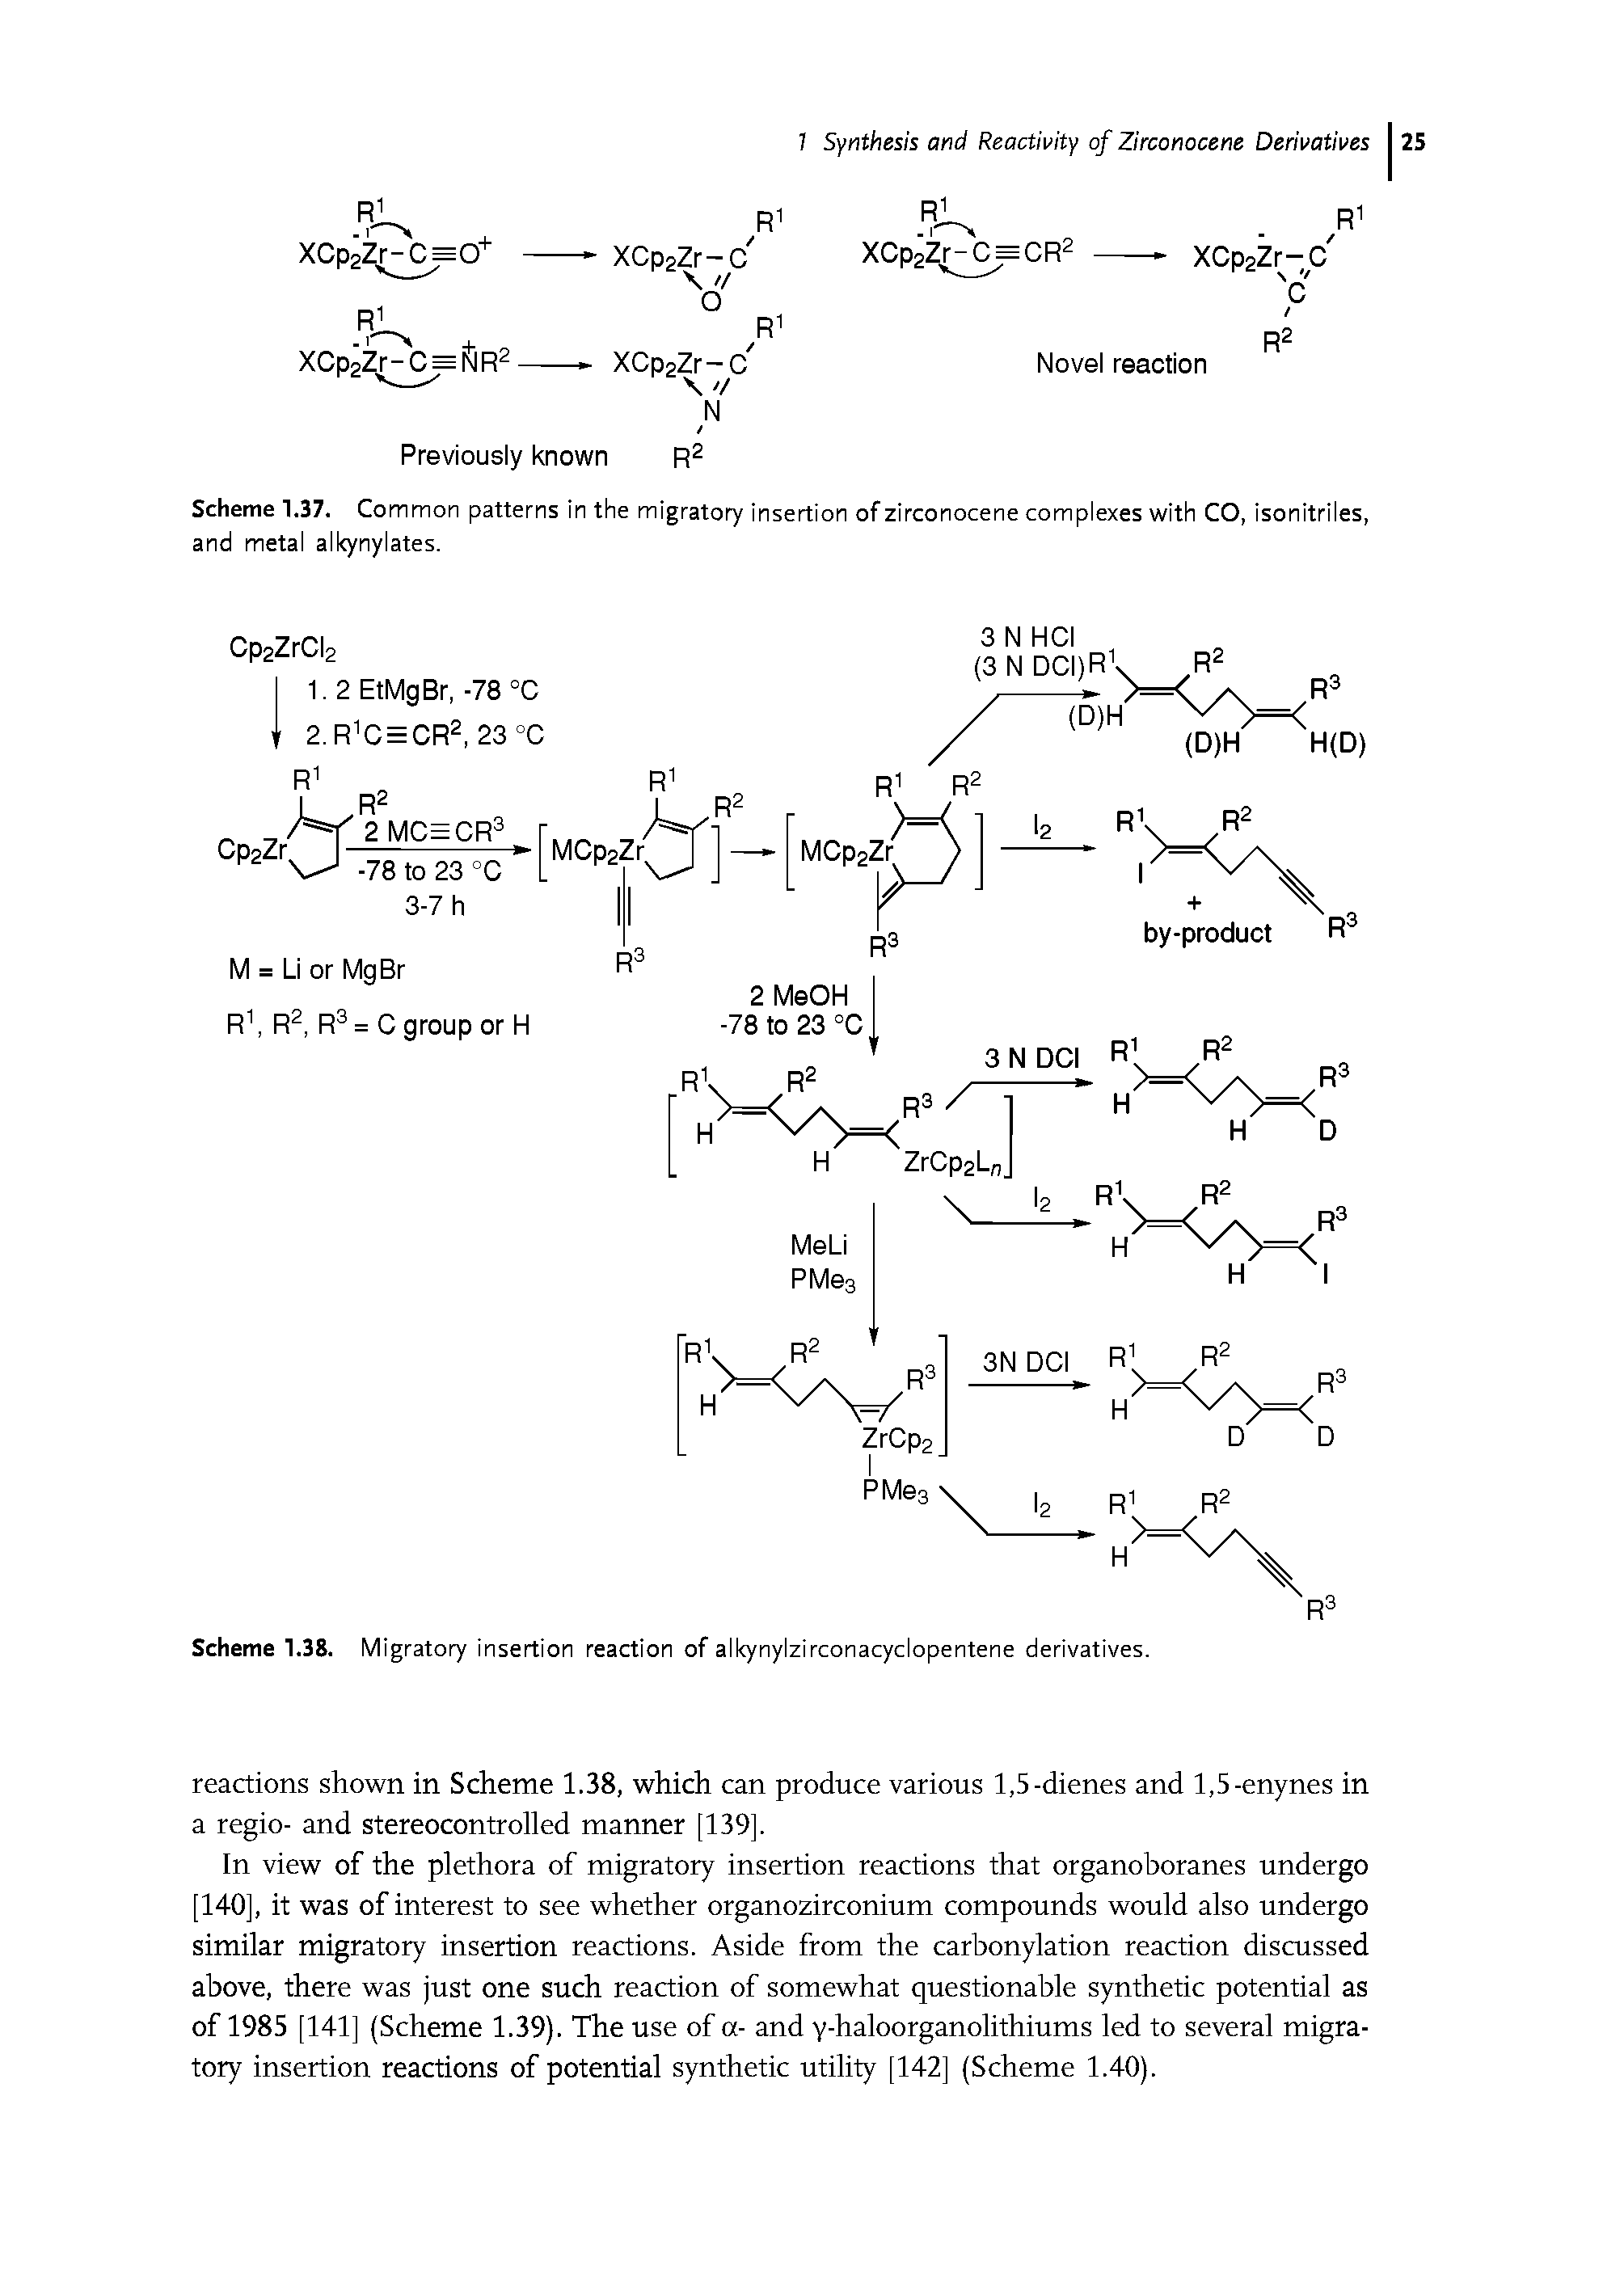 Scheme 1.38. Migratory insertion reaction of alkynylzirconacyclopentene derivatives.